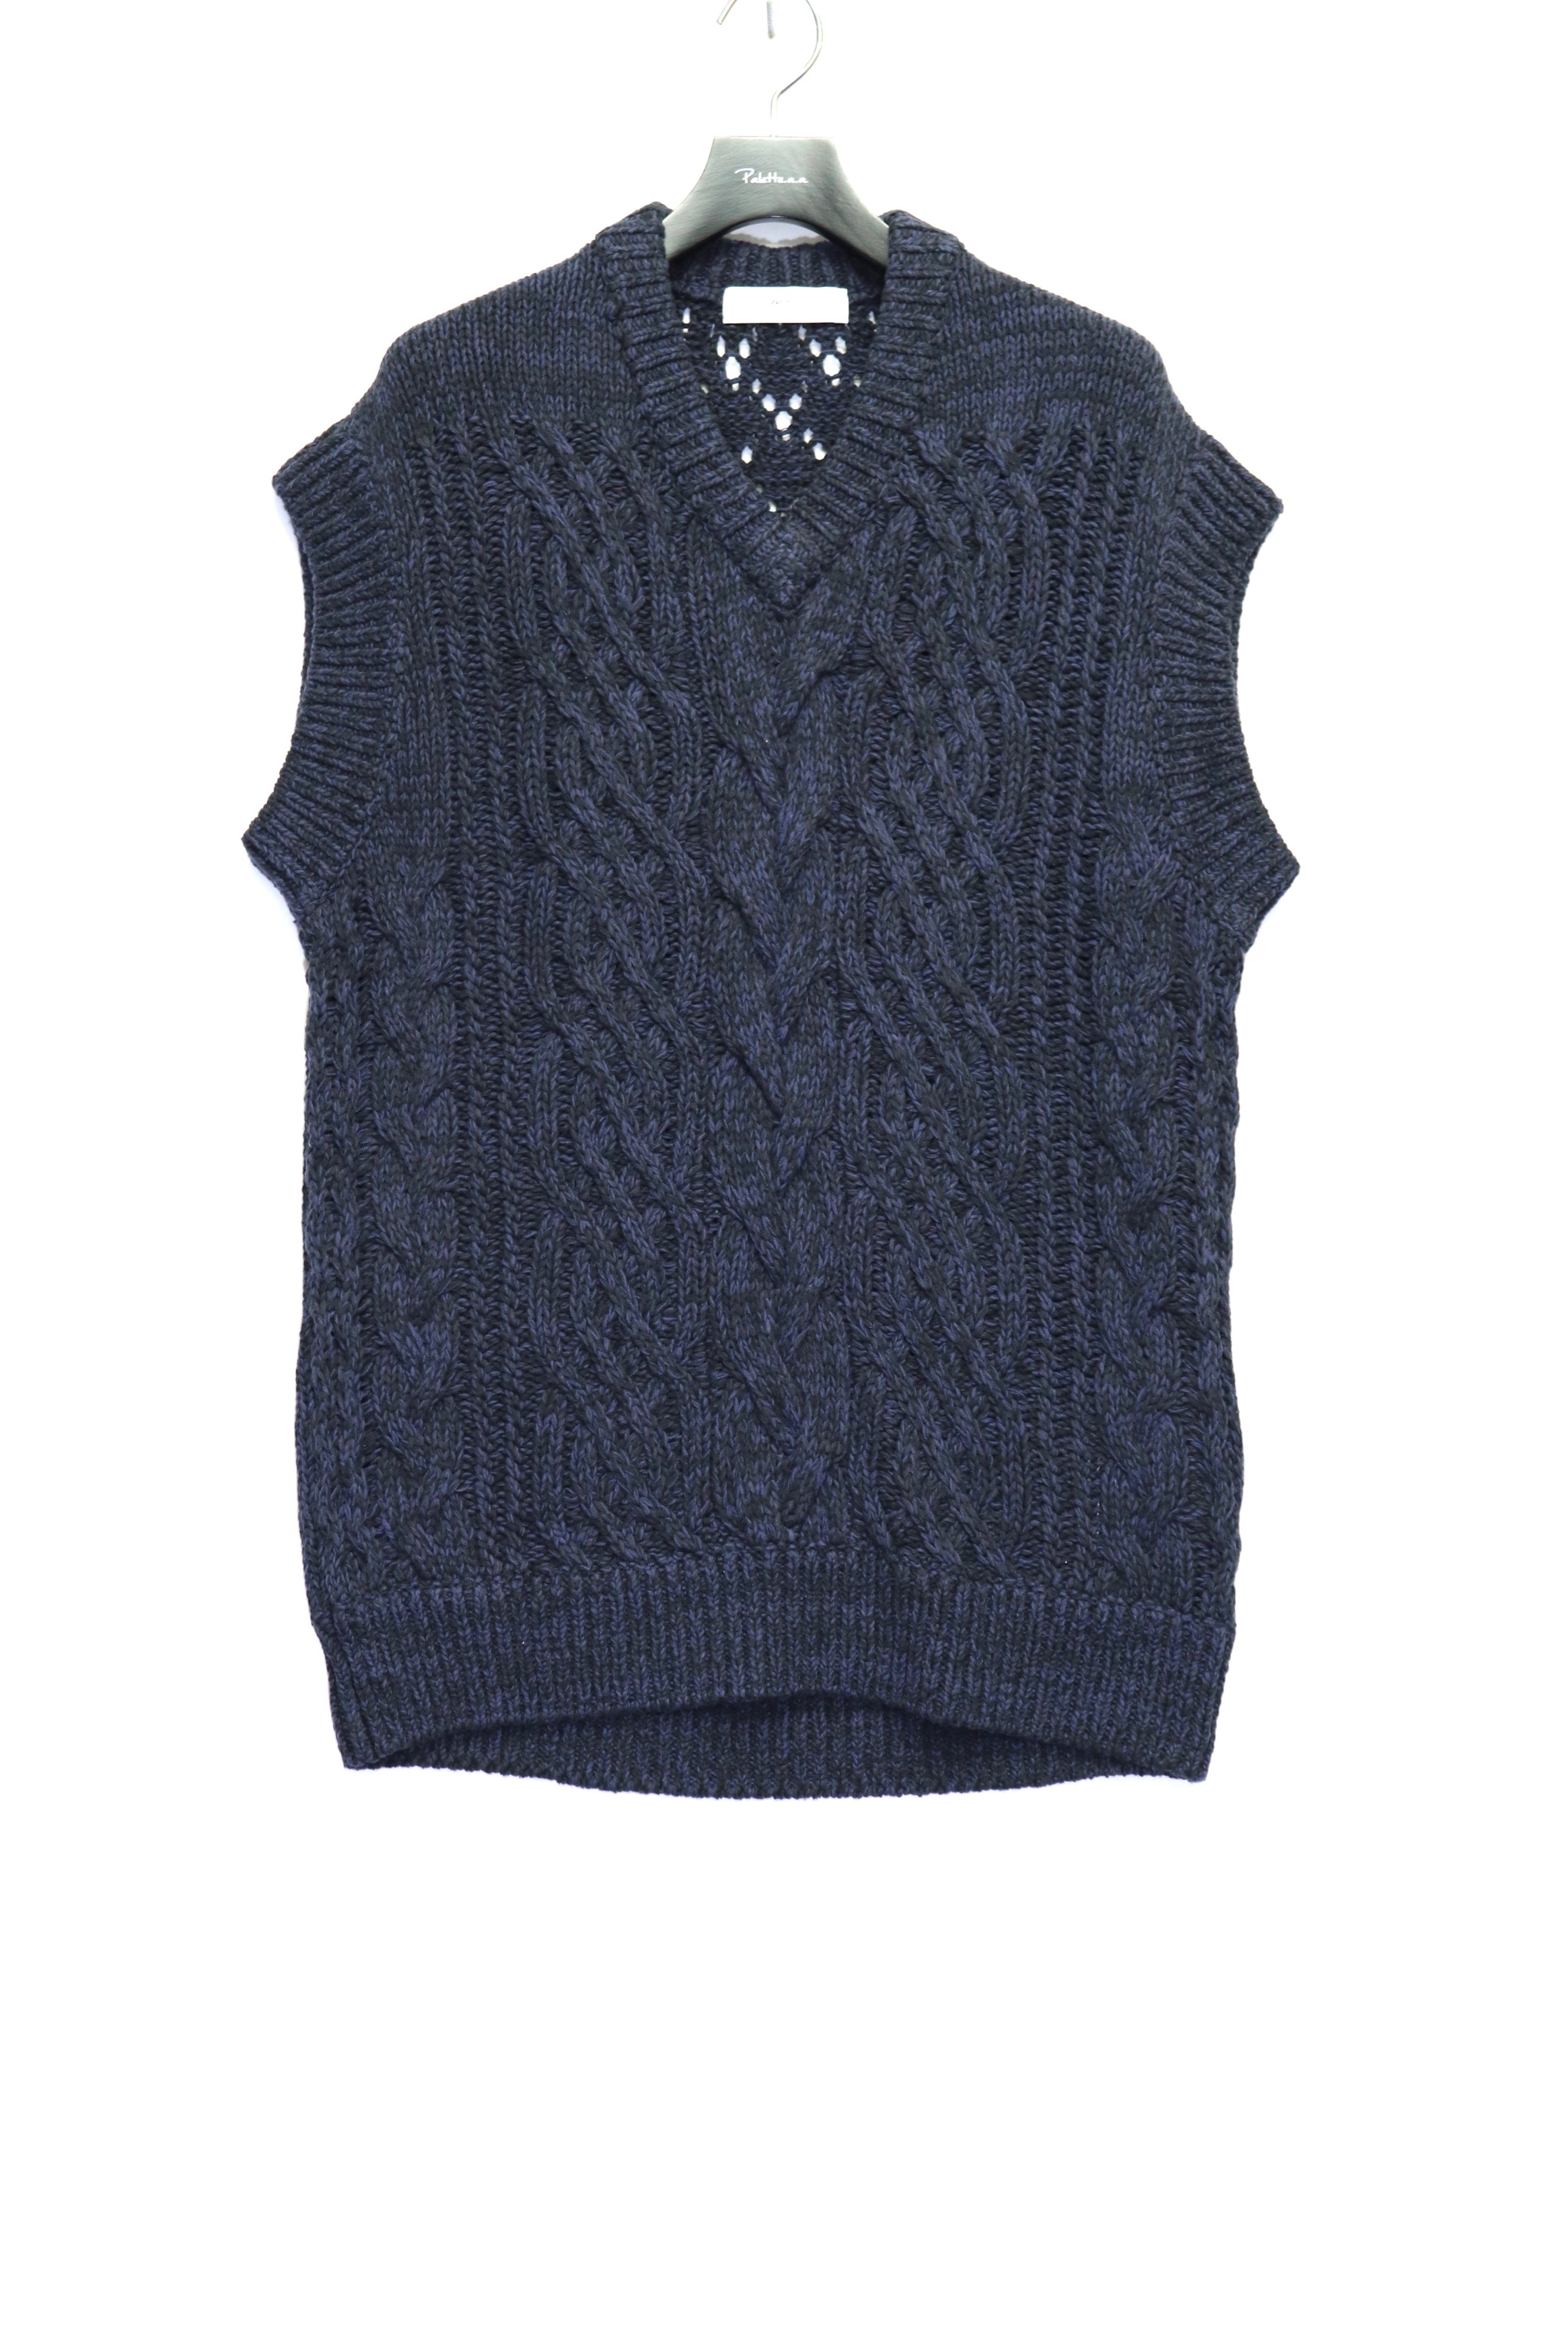 TOGA VIRILIS(トーガ ビリリース)22ssのCable knit vest NAVYの通販